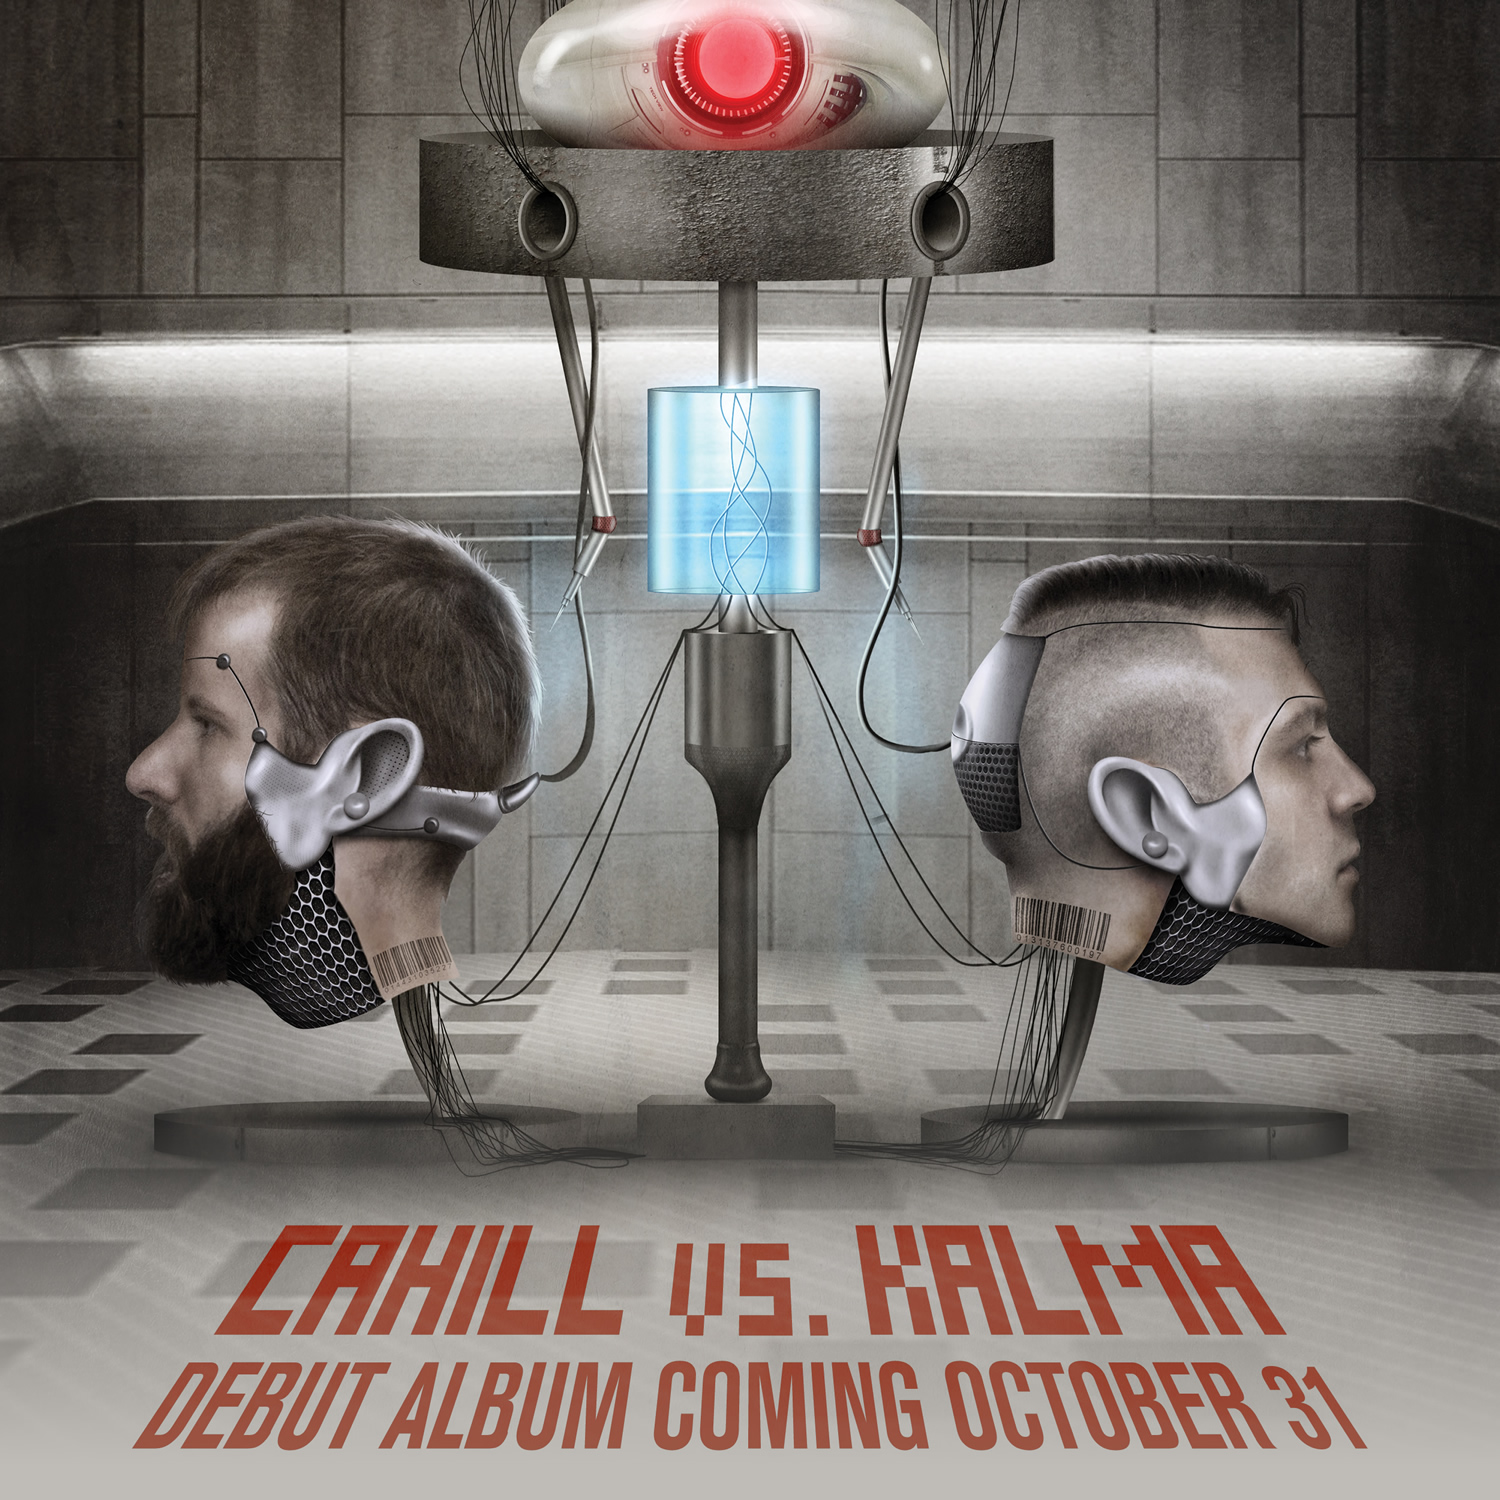 Cahill vs Kalma October 31